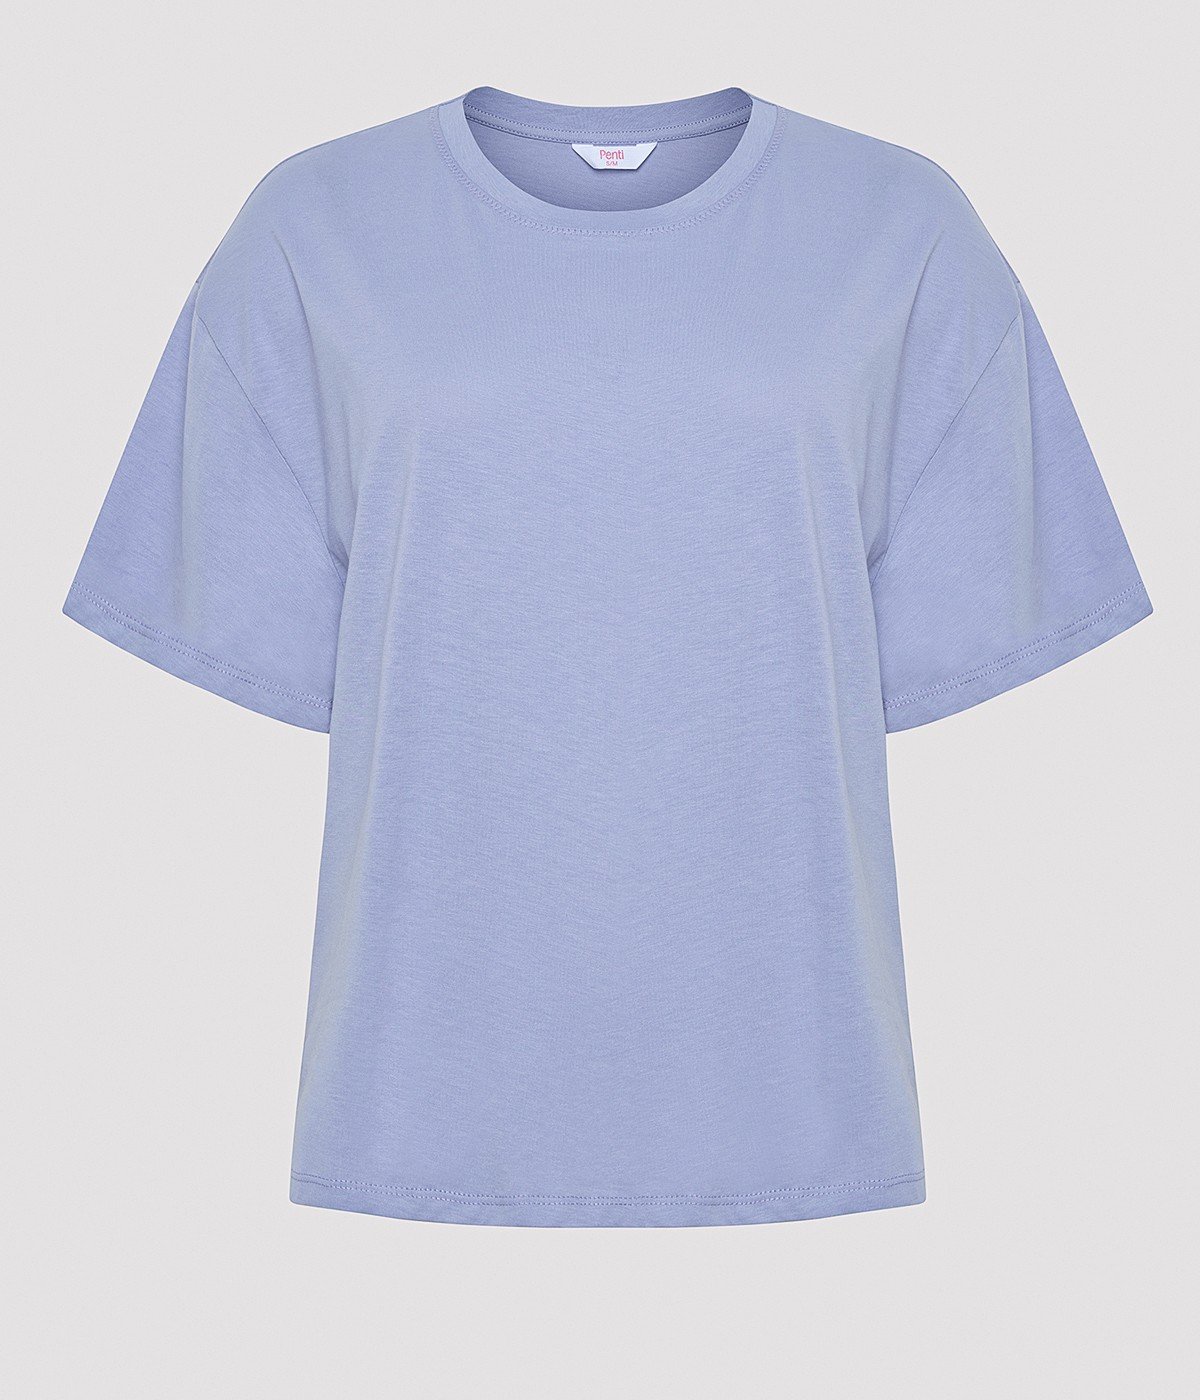 Printed Lilac T-Shirt